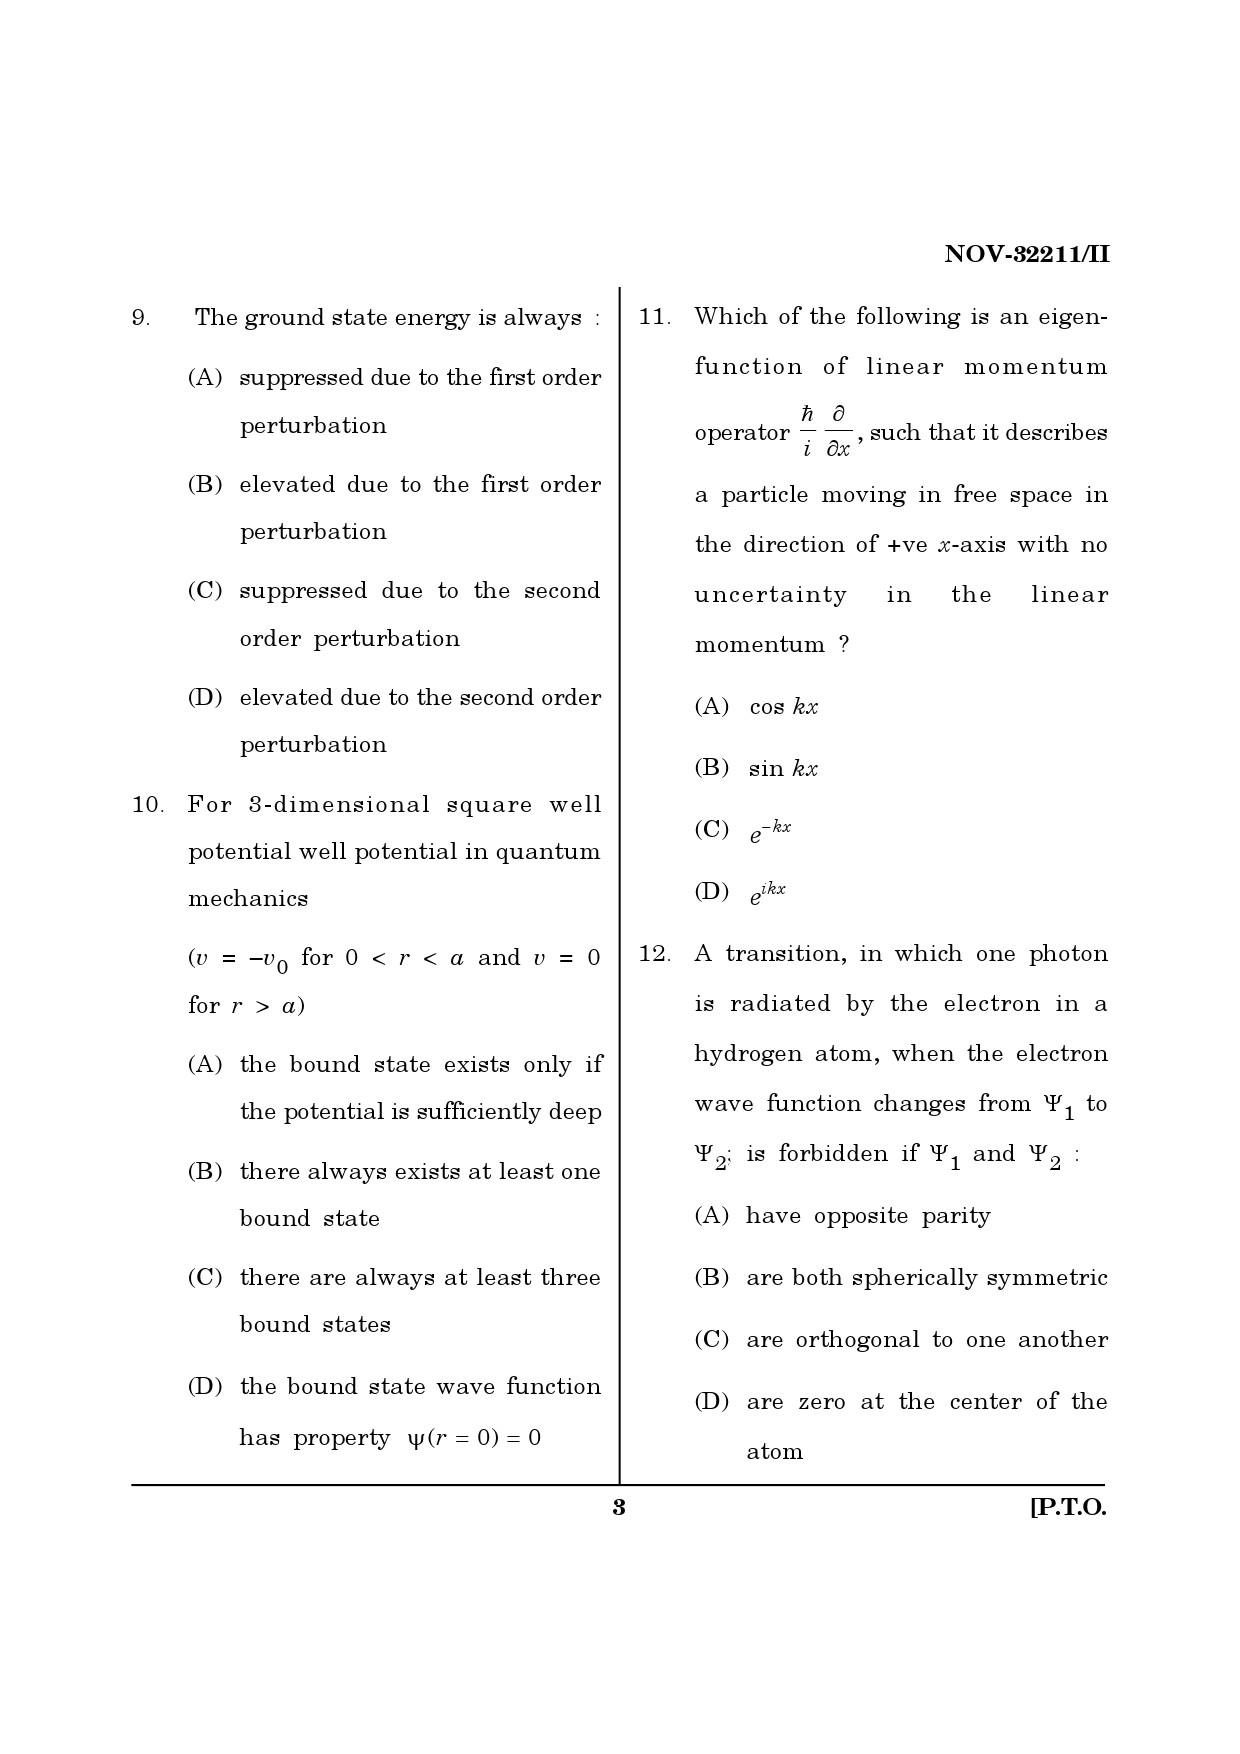 Maharashtra SET Physics Question Paper II November 2011 3